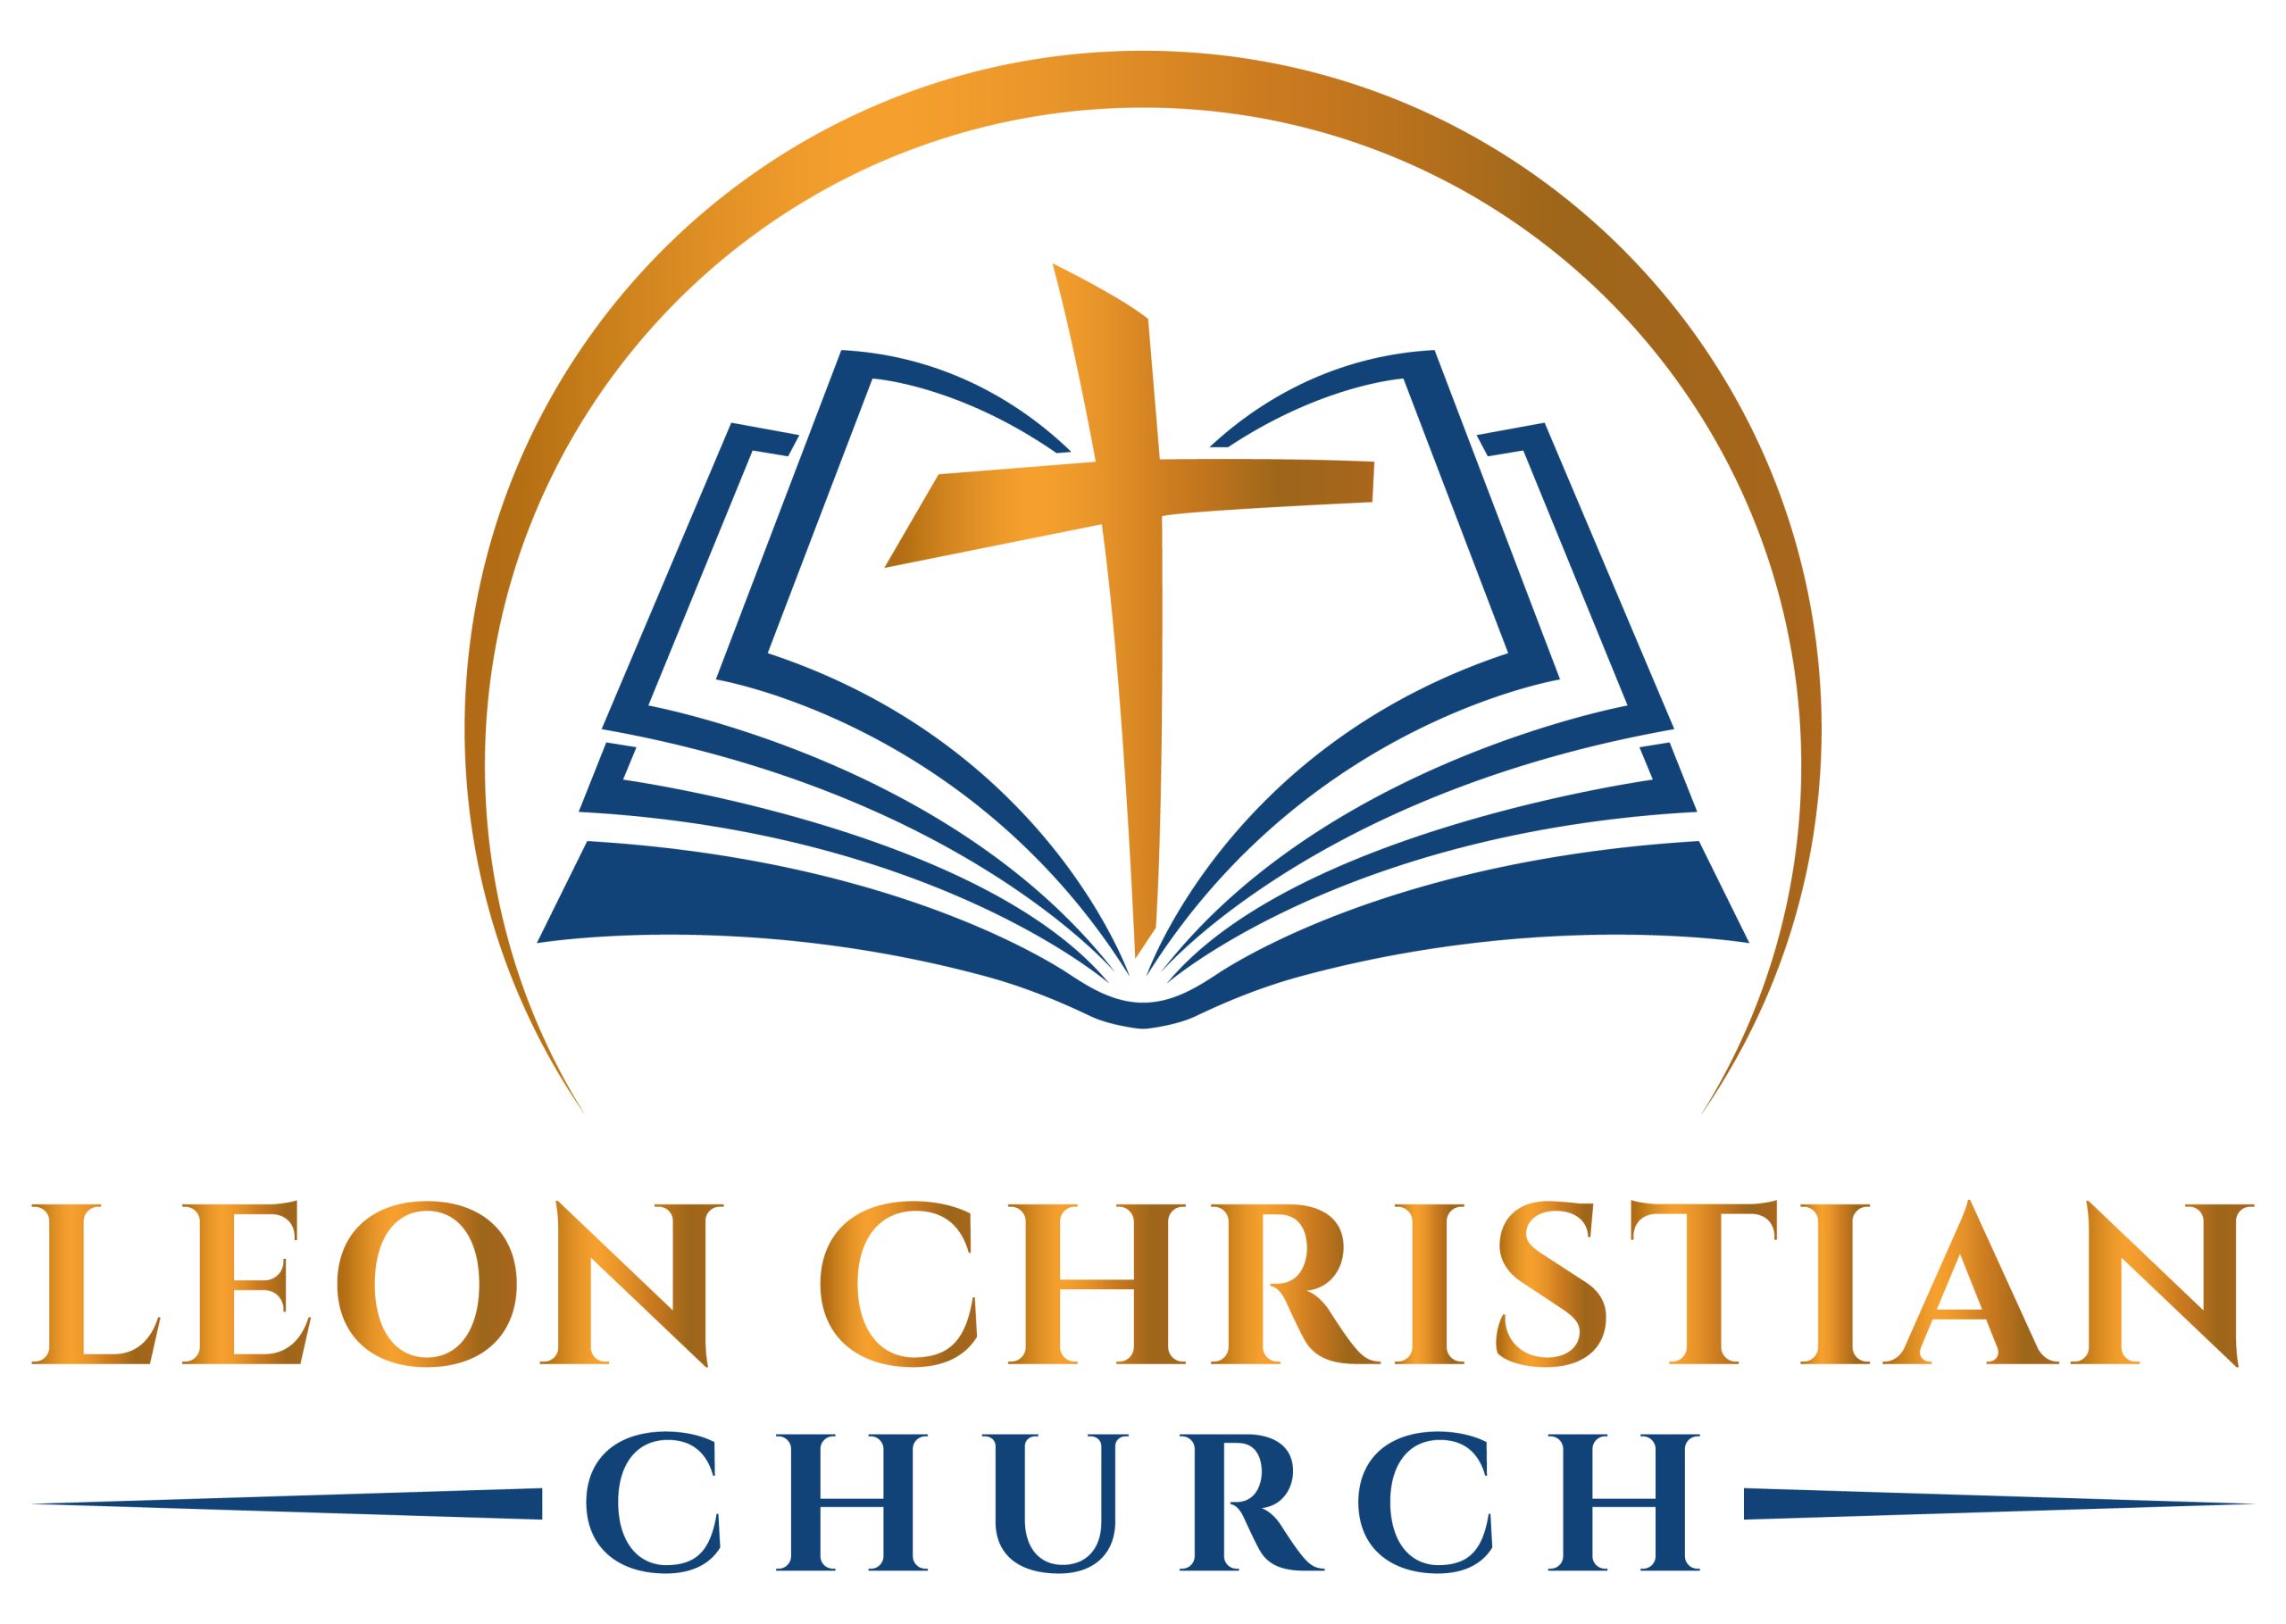 LEON CHRISTIAN CHURCH